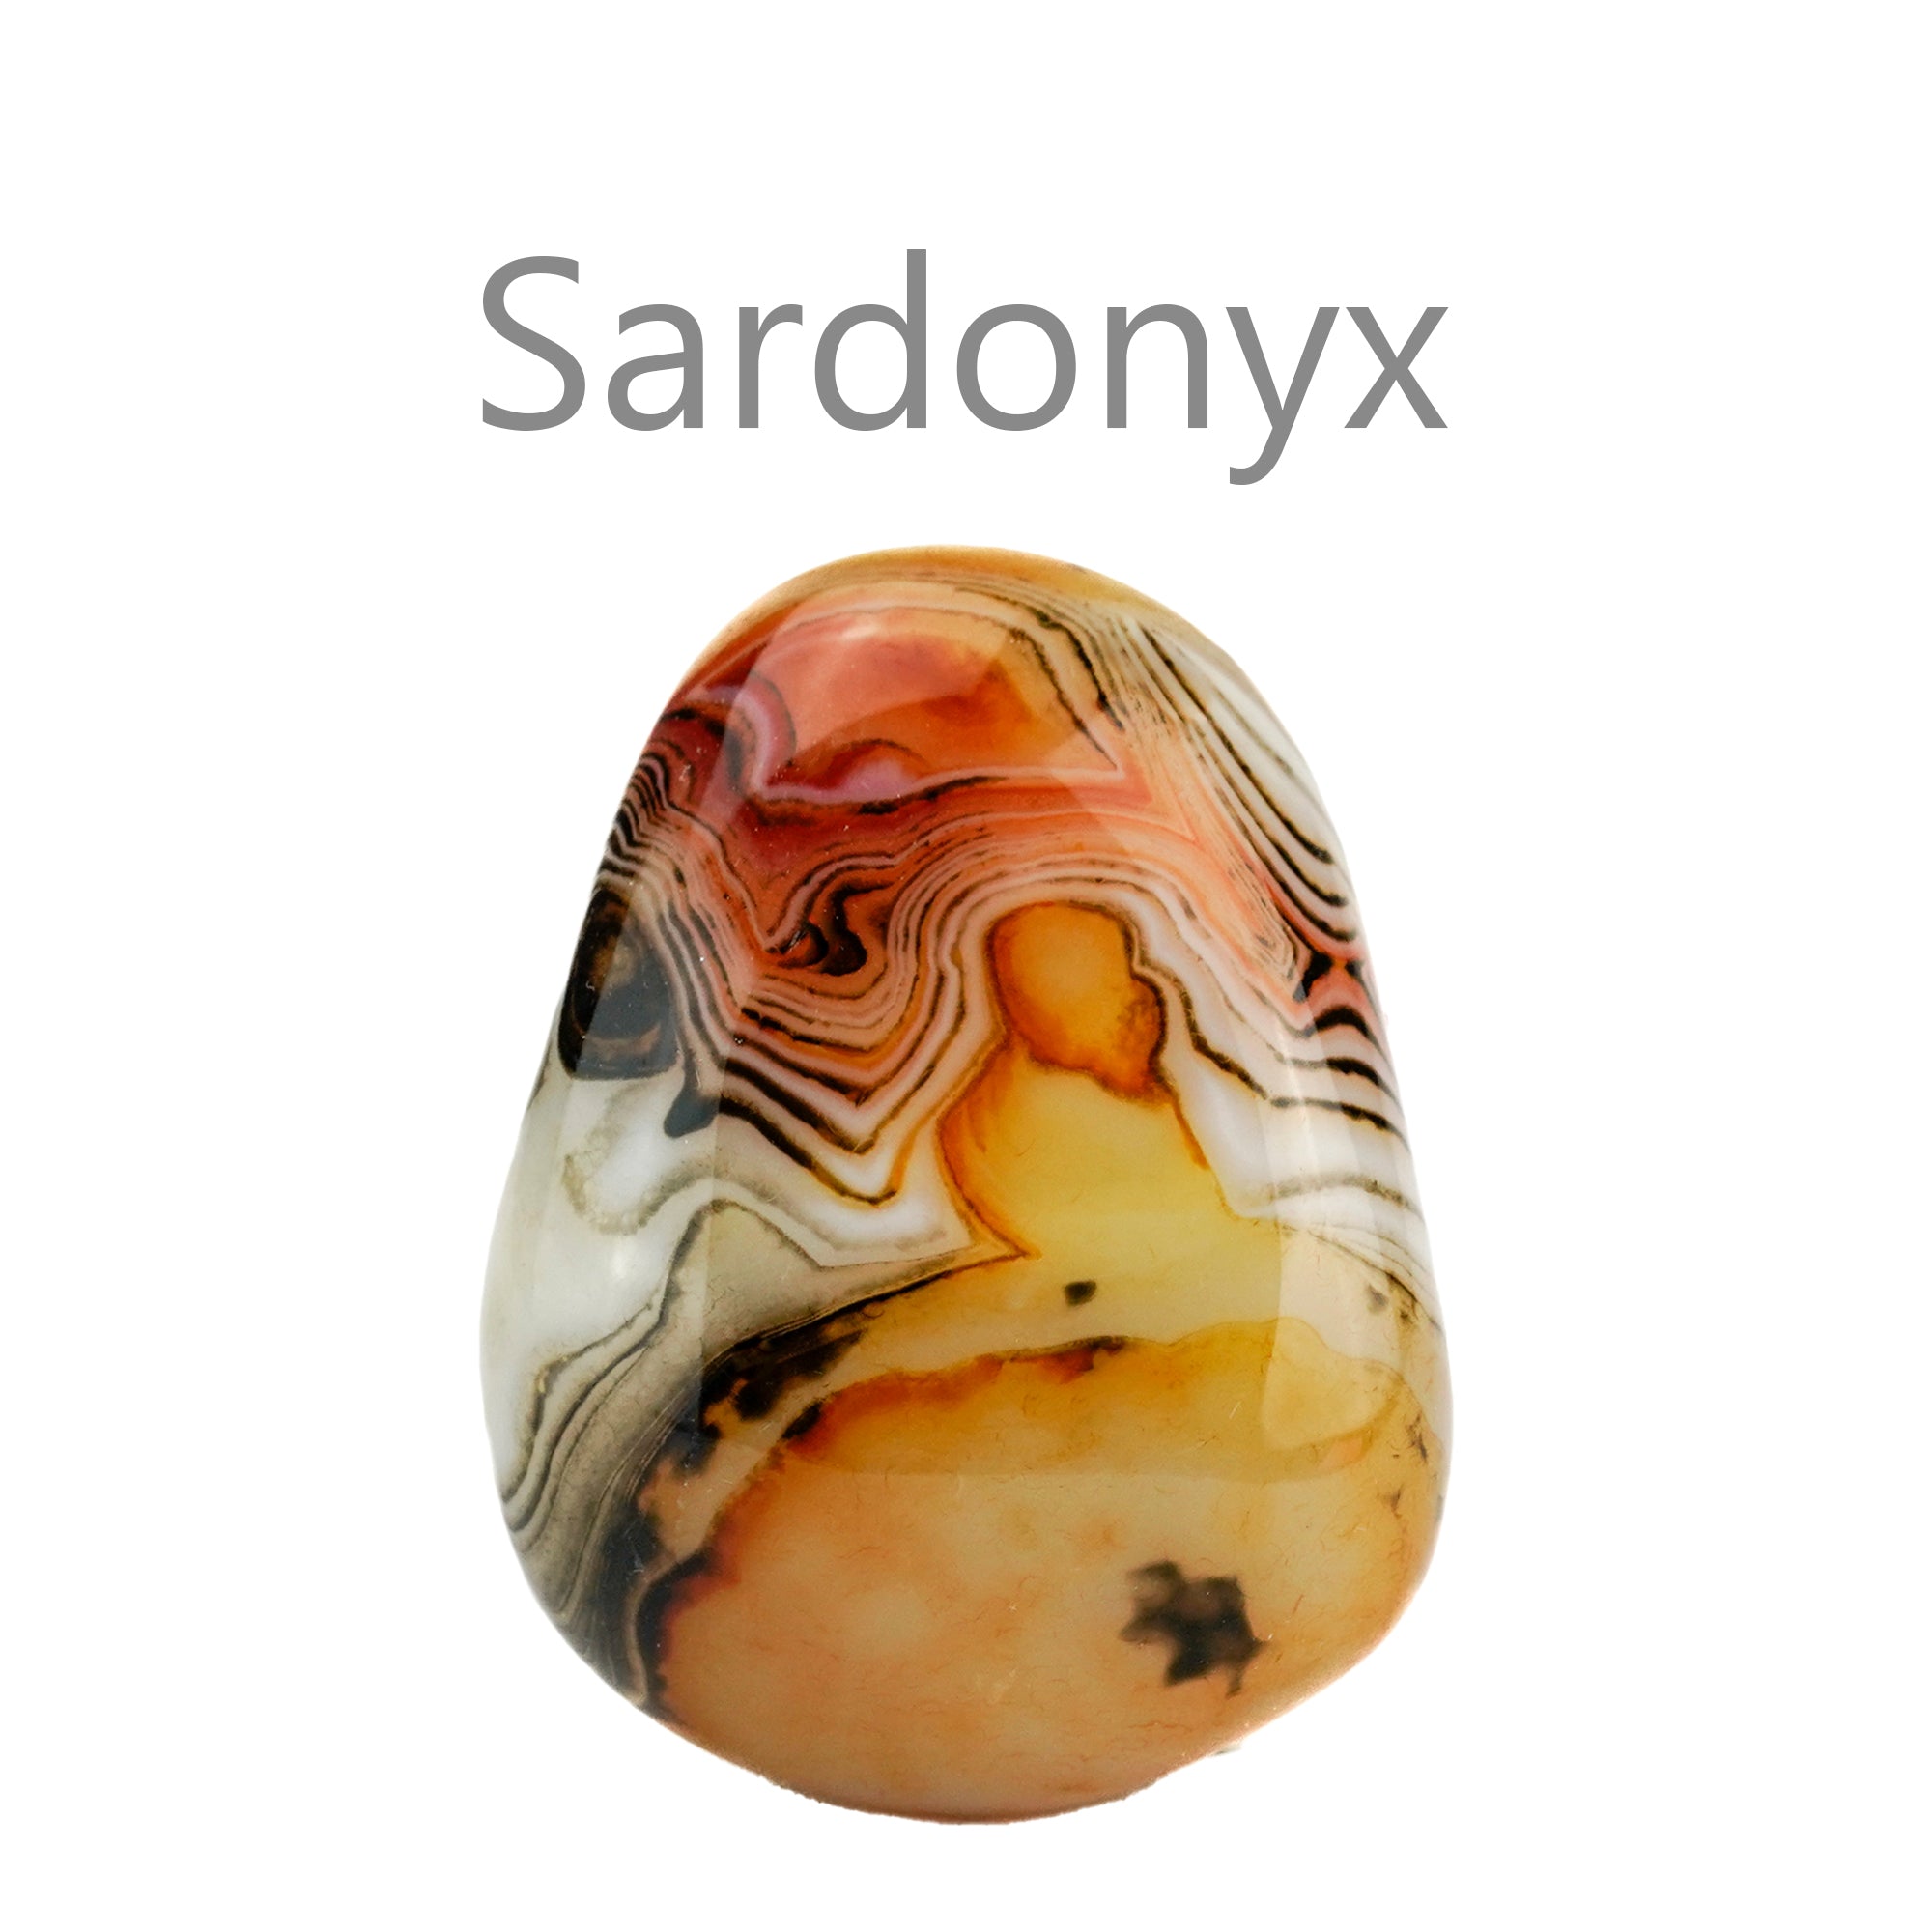 sardonyx